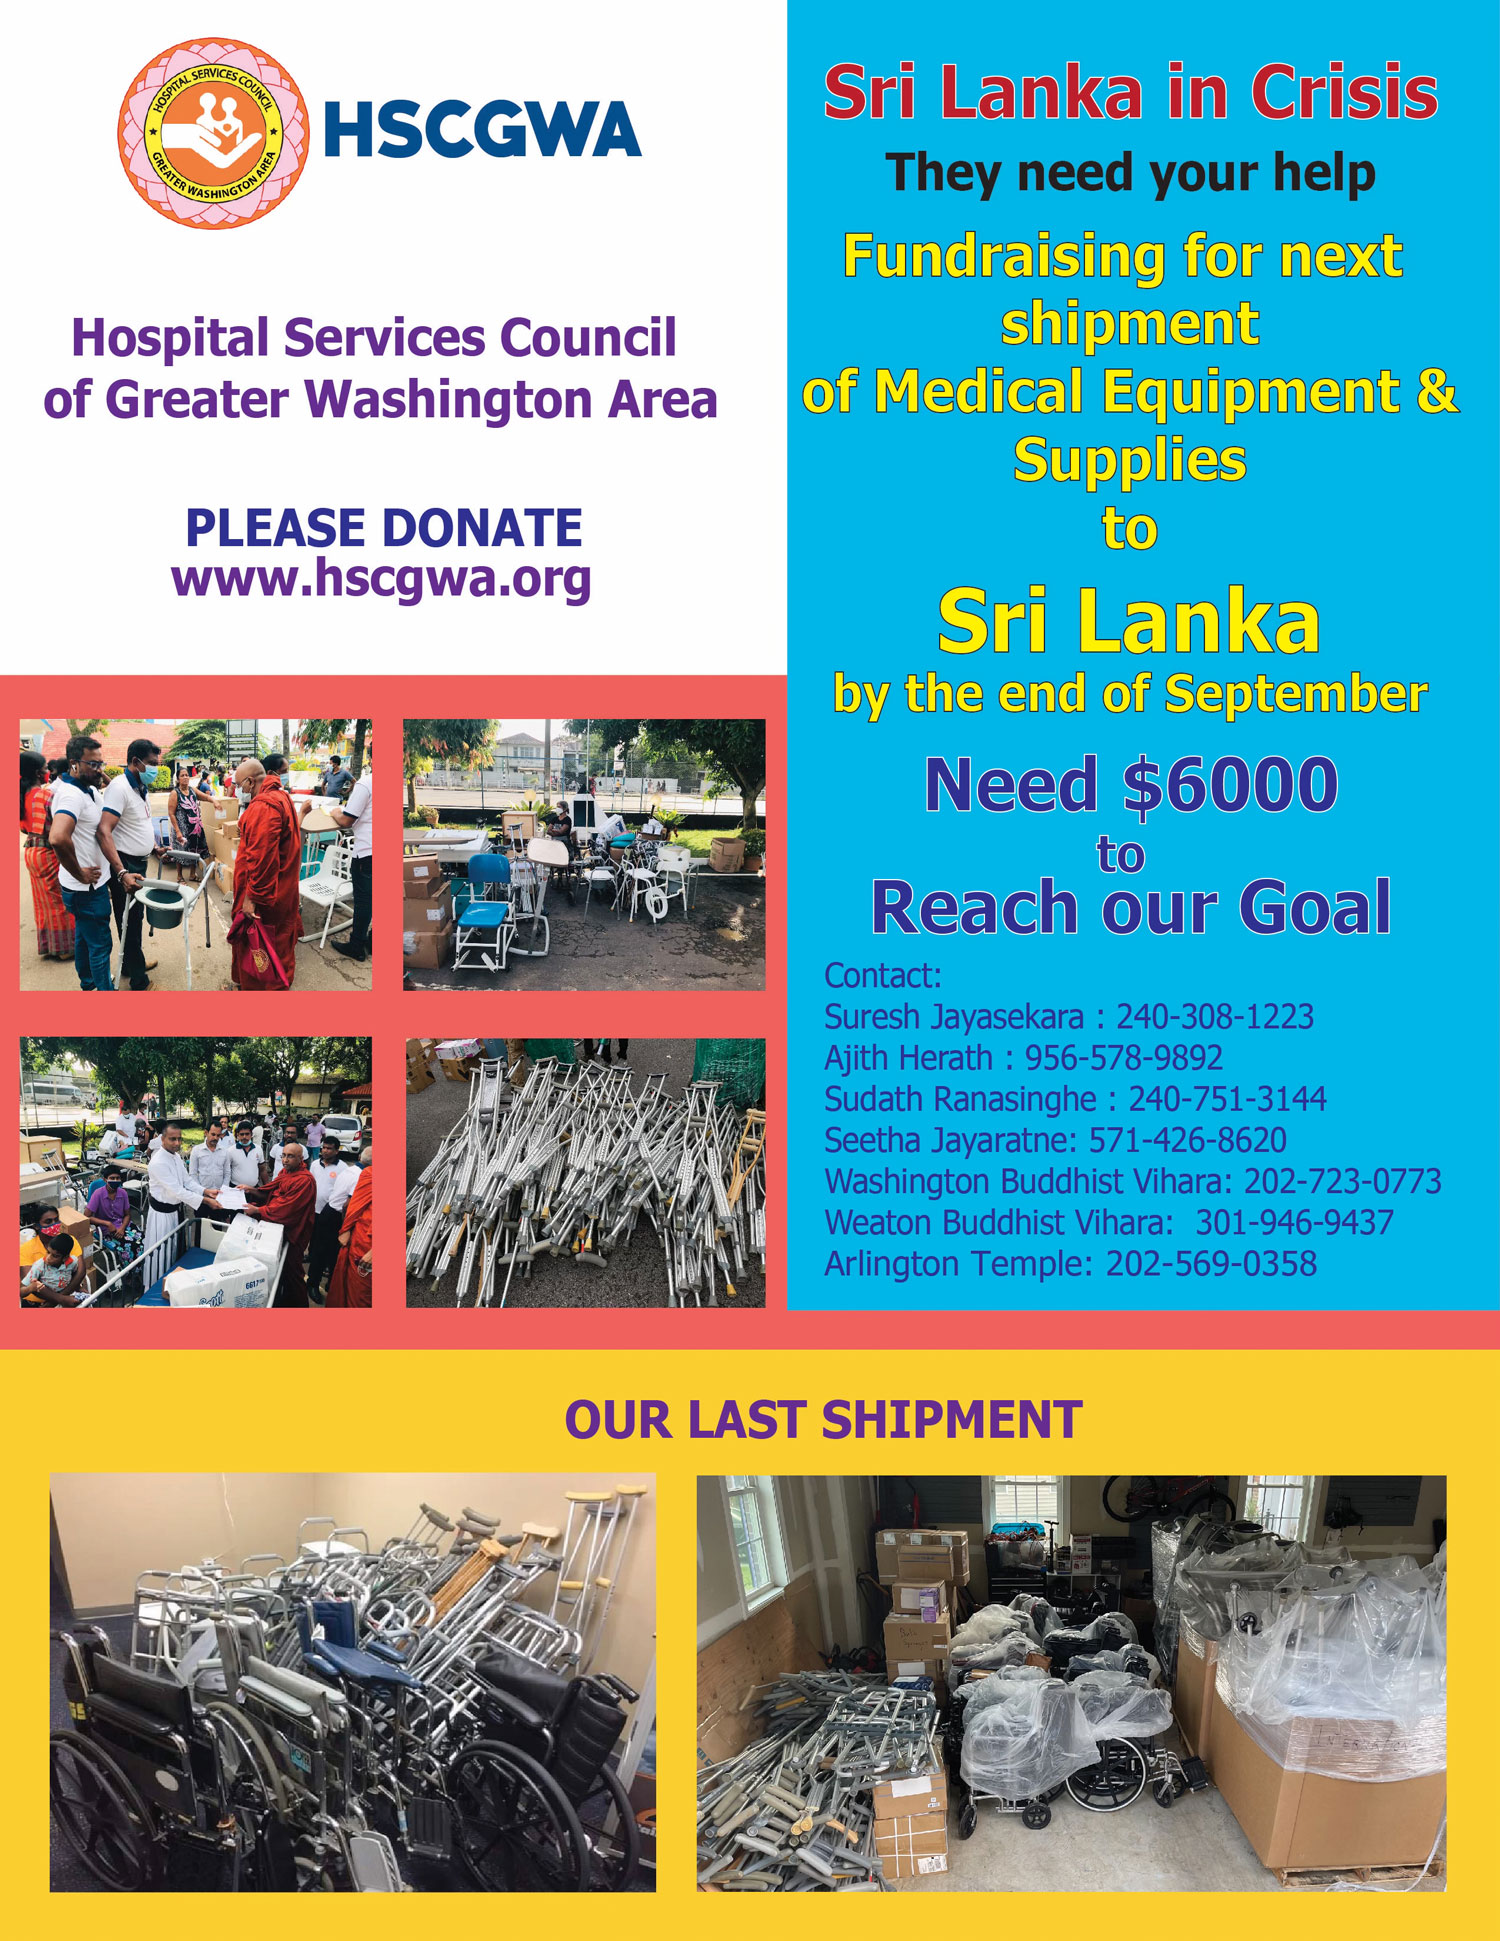 Help Sri Lanka